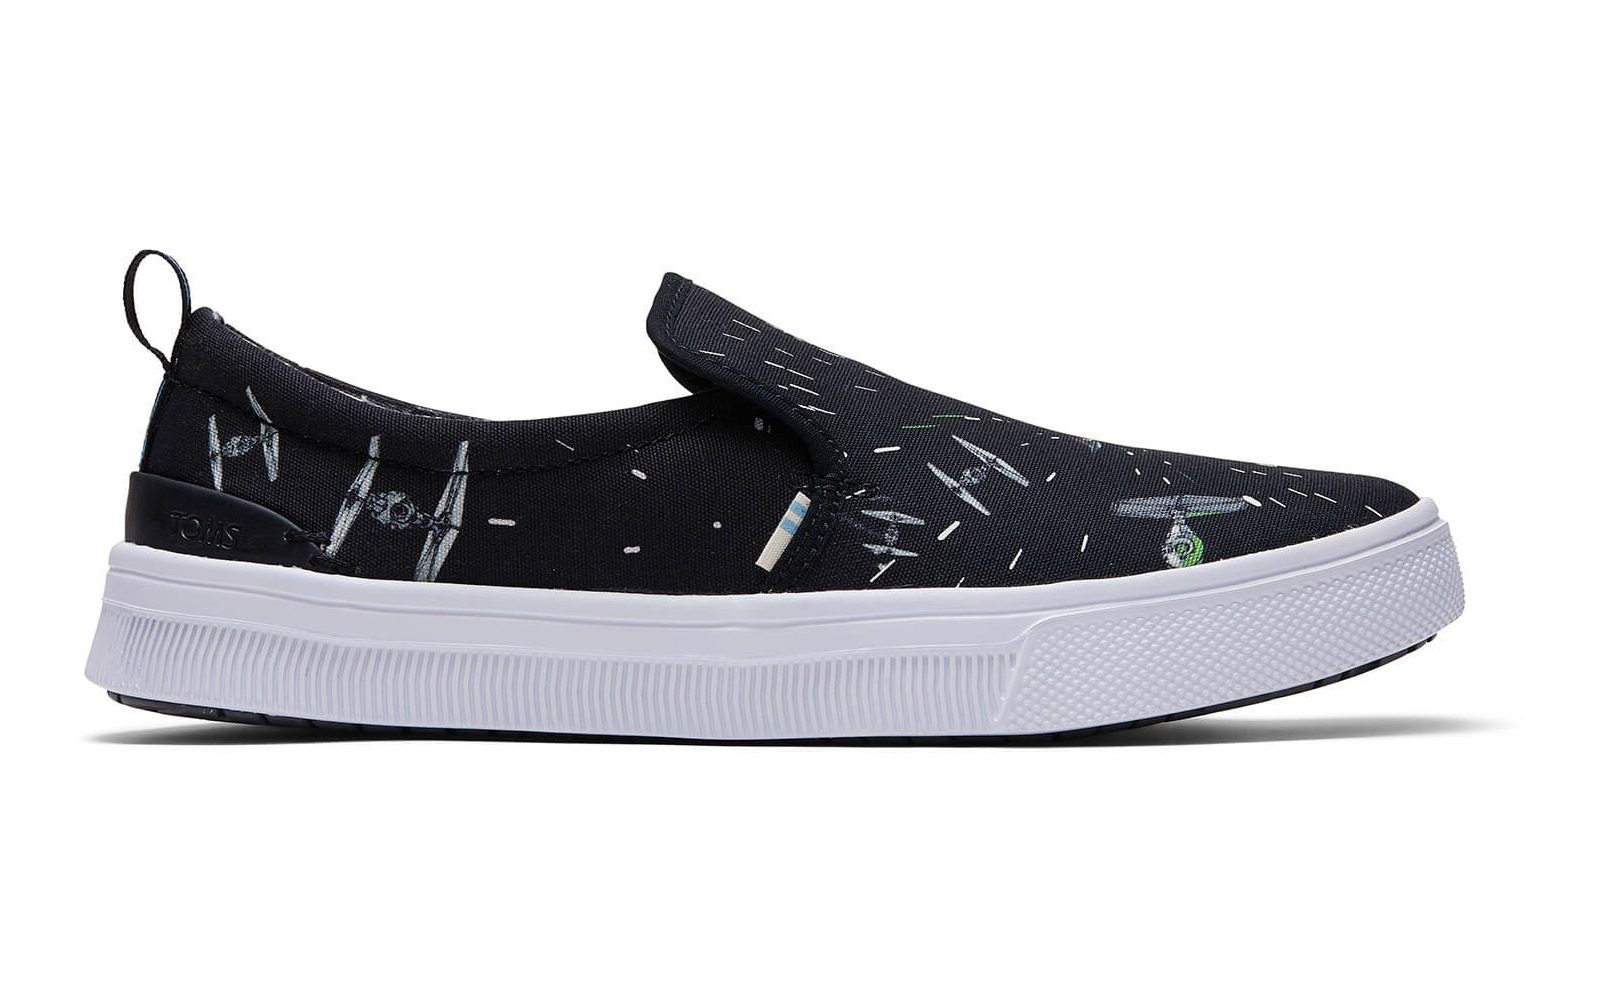 Toms x Star Wars Summer Footwear Collection 2019